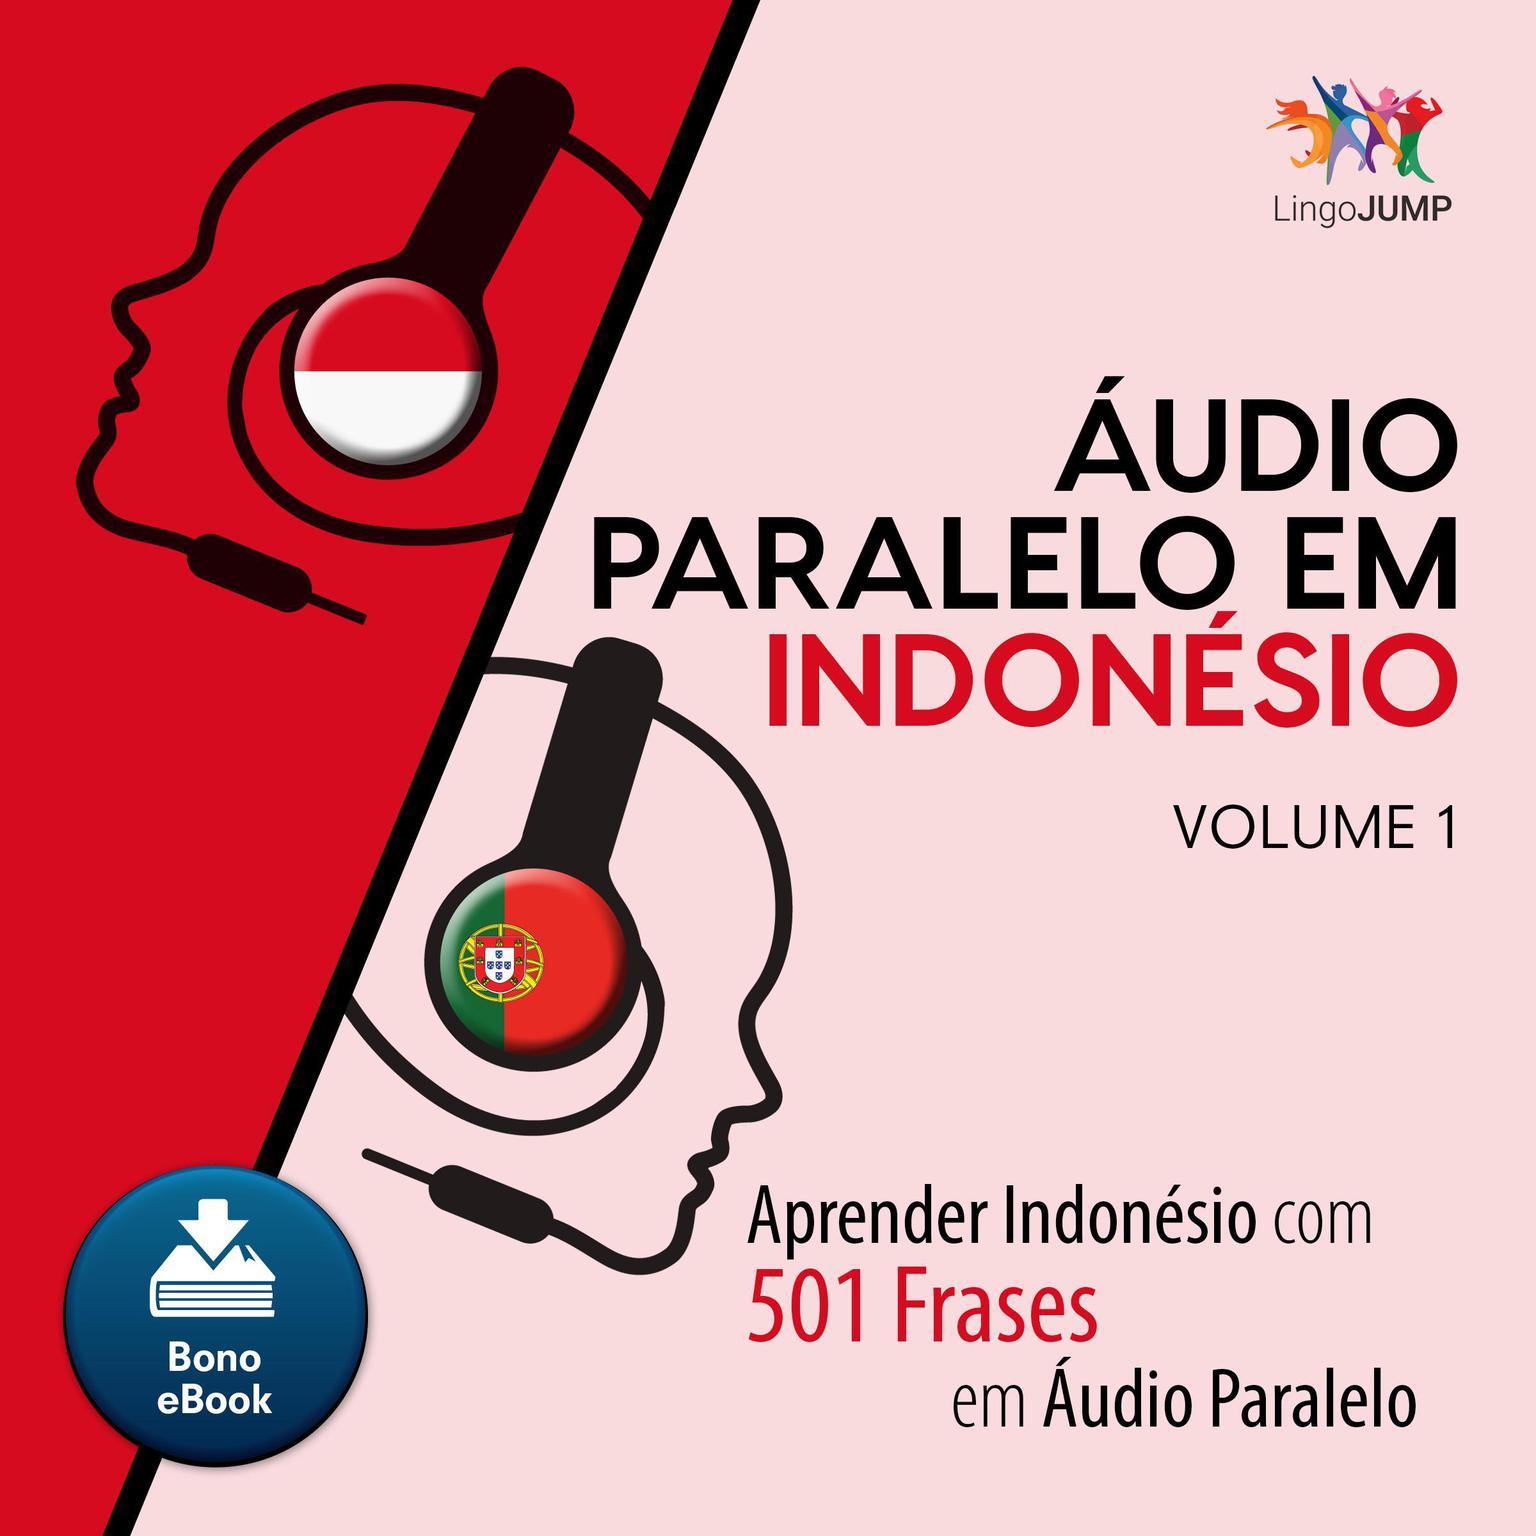 Audio Paralelo em Indonsio - Aprender Indonsio com 501 Frases em udio Paralelo - Volume 1 Audiobook, by Lingo Jump